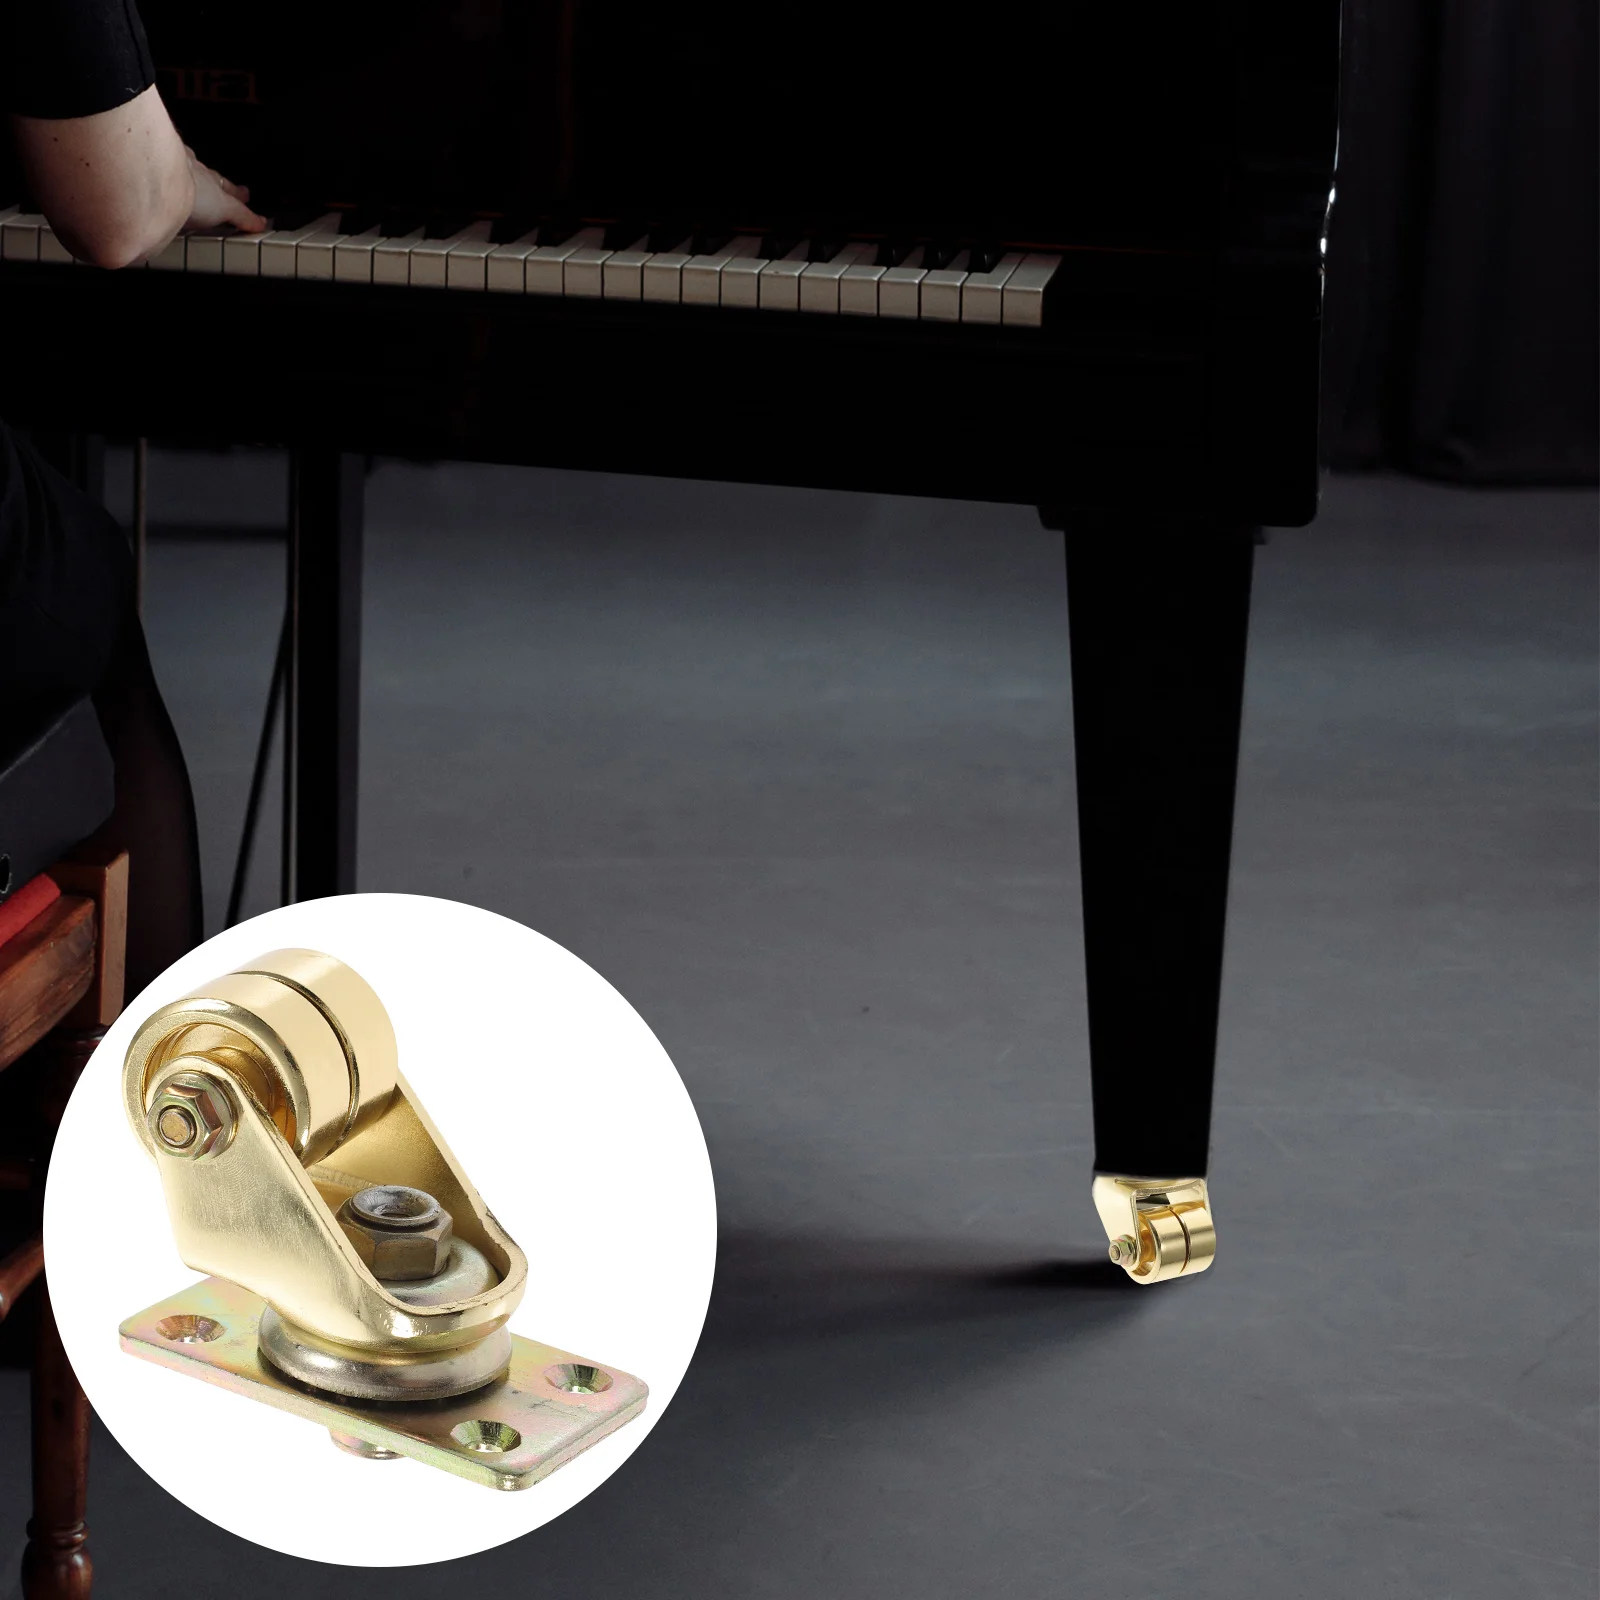 

Upright Piano Casters Piano Accessories Textured Piano Caster Accessory Upright Piano Caster For Moving Piano (Golden)